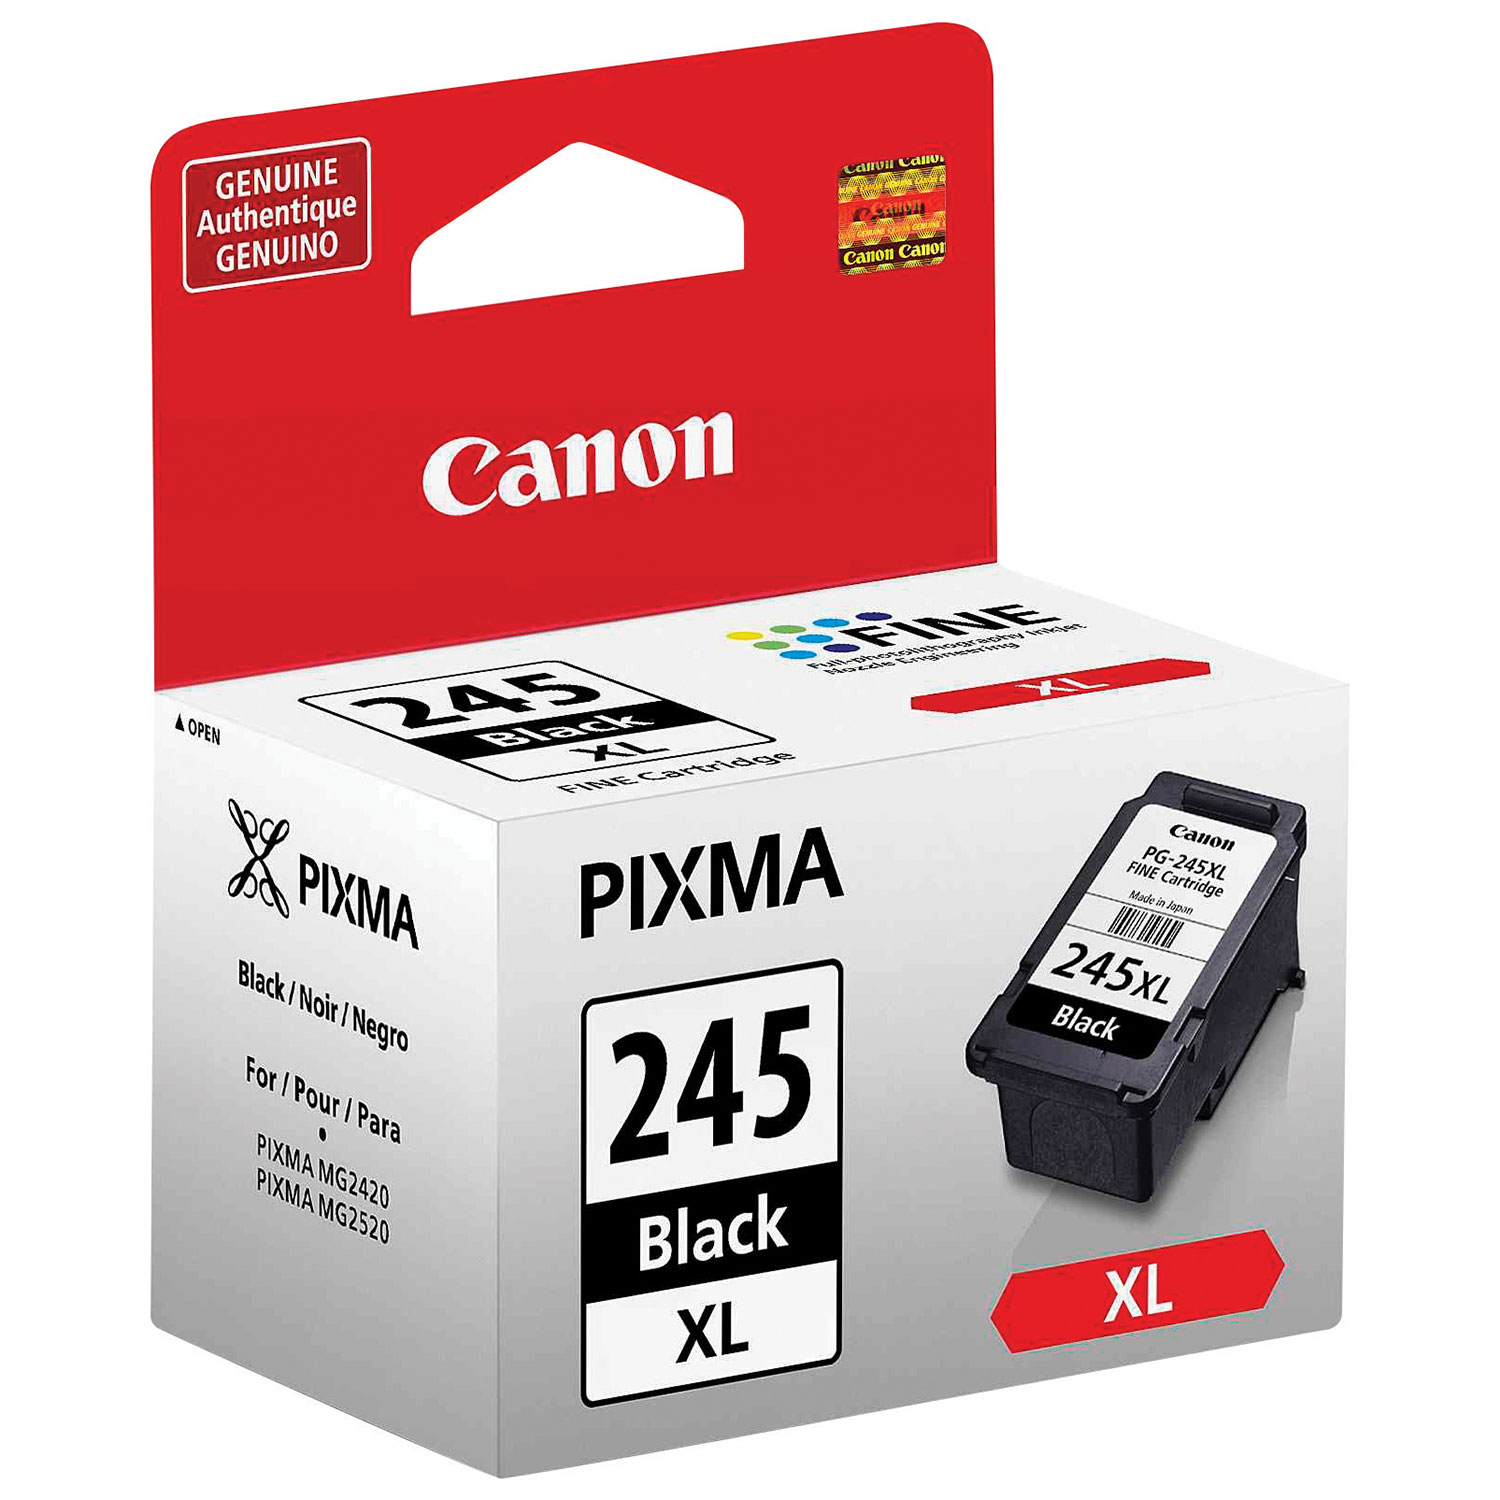 Canon Pixma 245XL Black Ink (8278B010) - 2 Pack